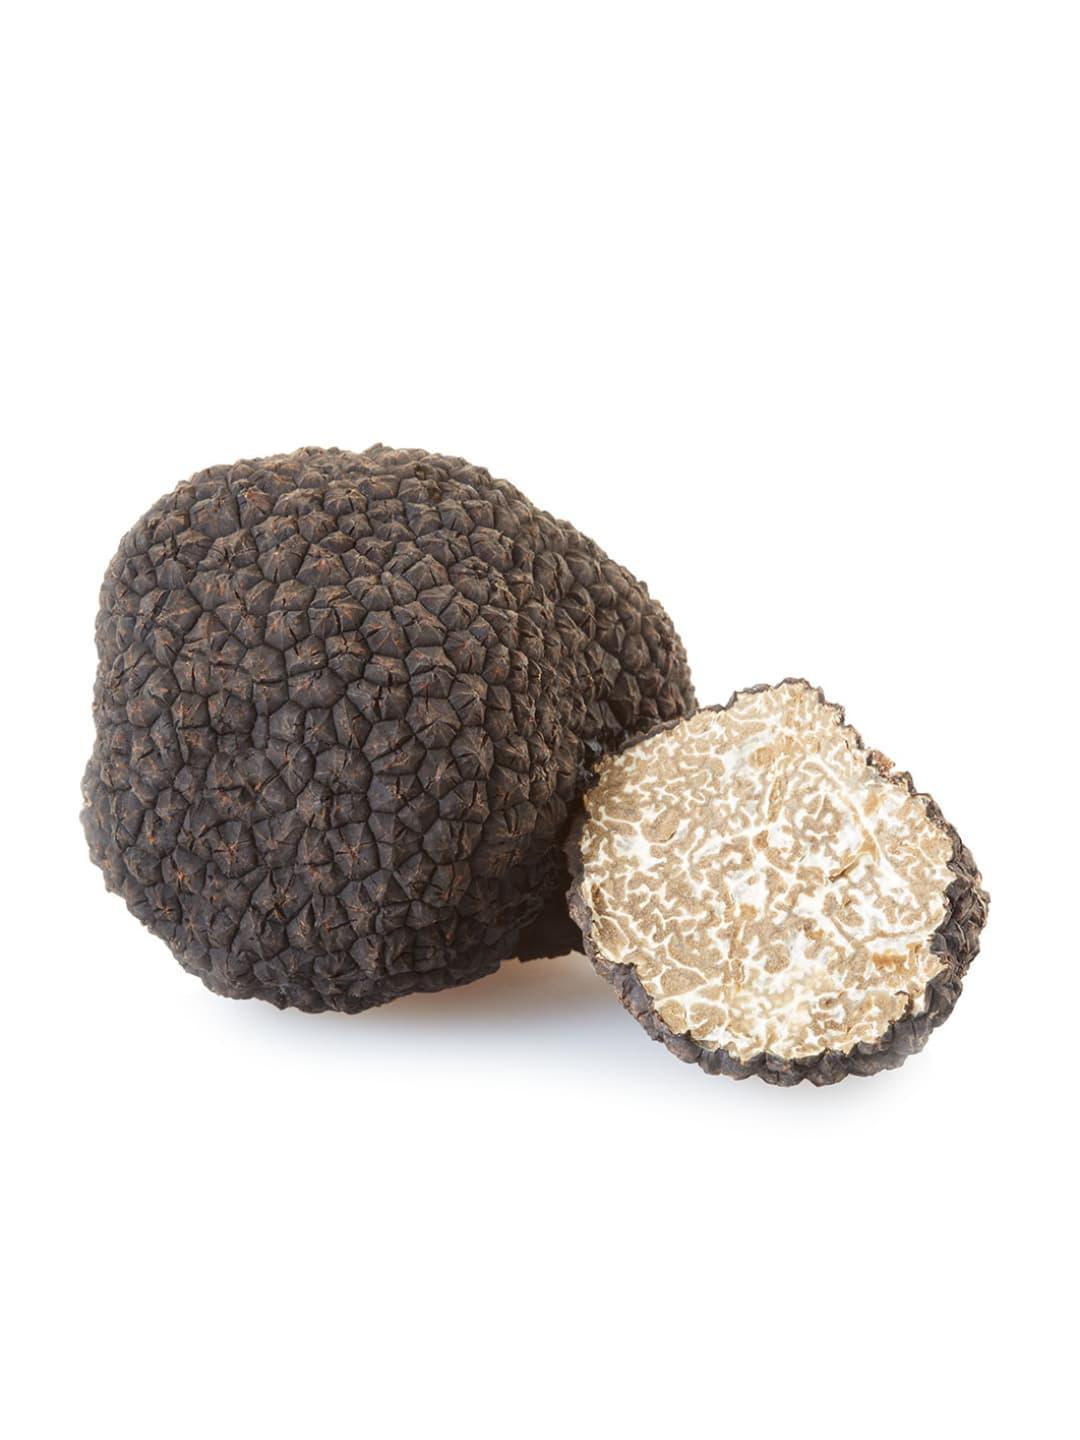 fresh black autumn truffle (tuber uncinatum chatin) 30 gr / 1_1 oz